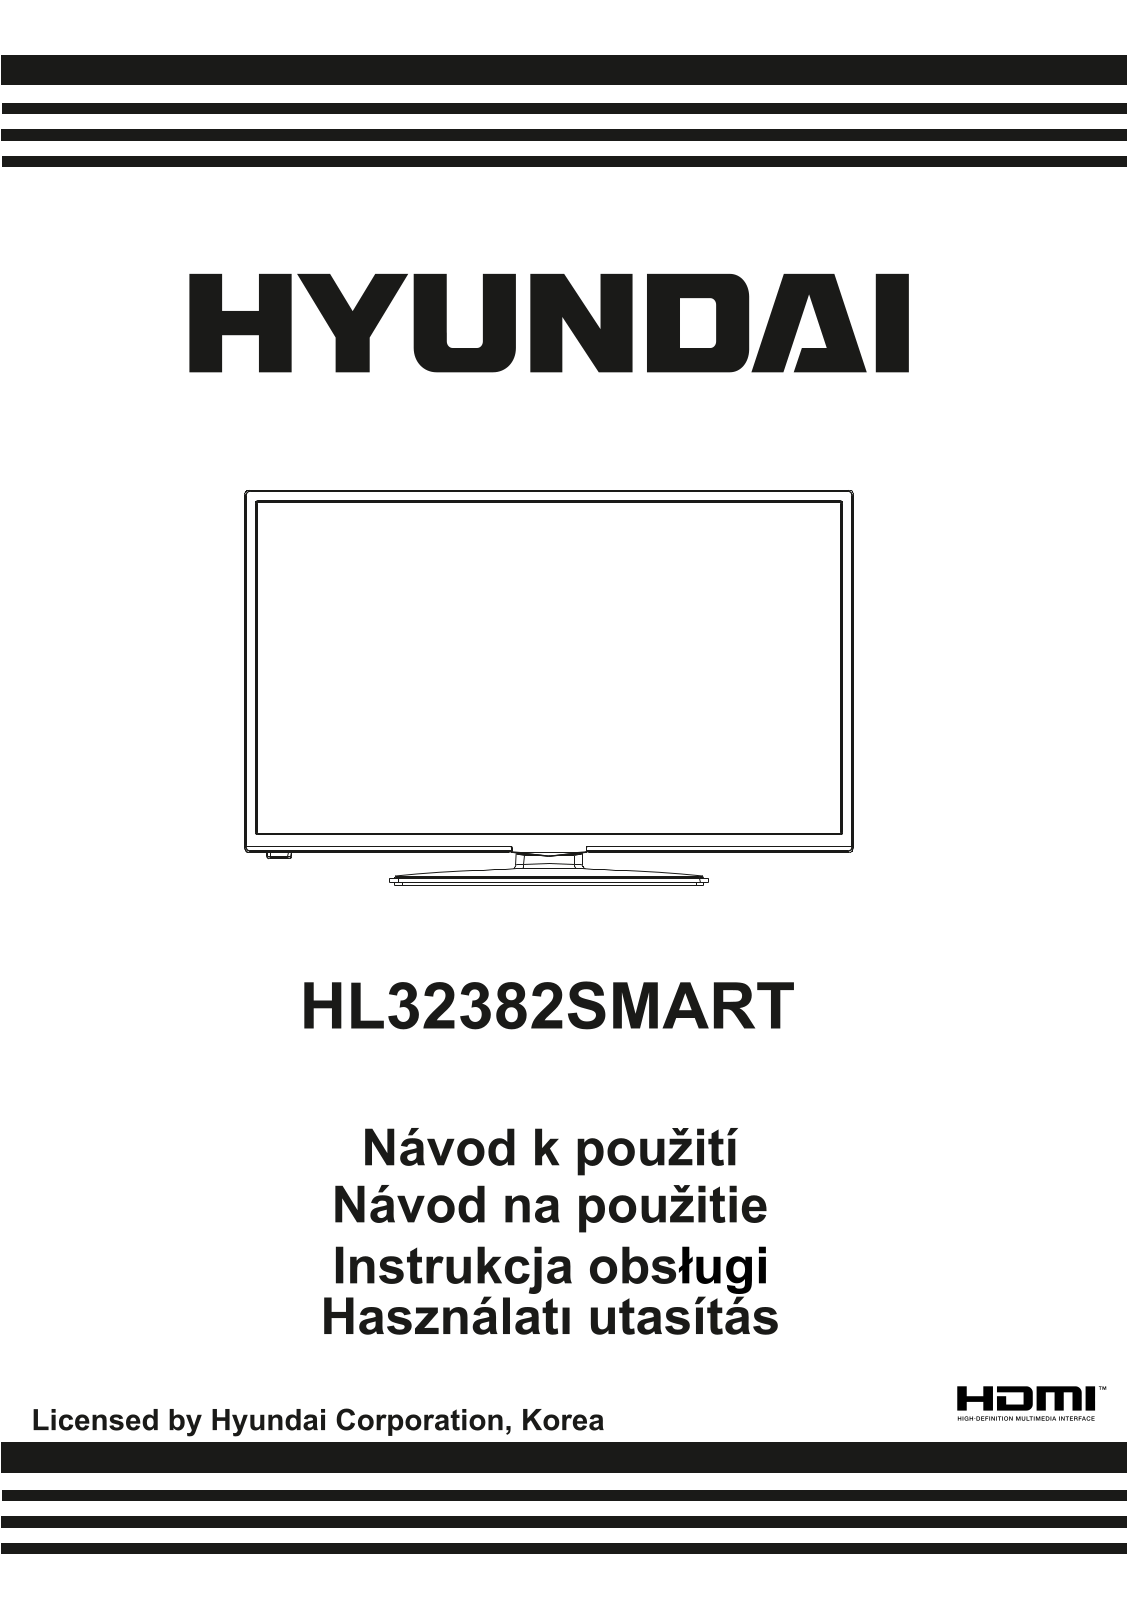 Hyundai HL 32382 SMART Manual